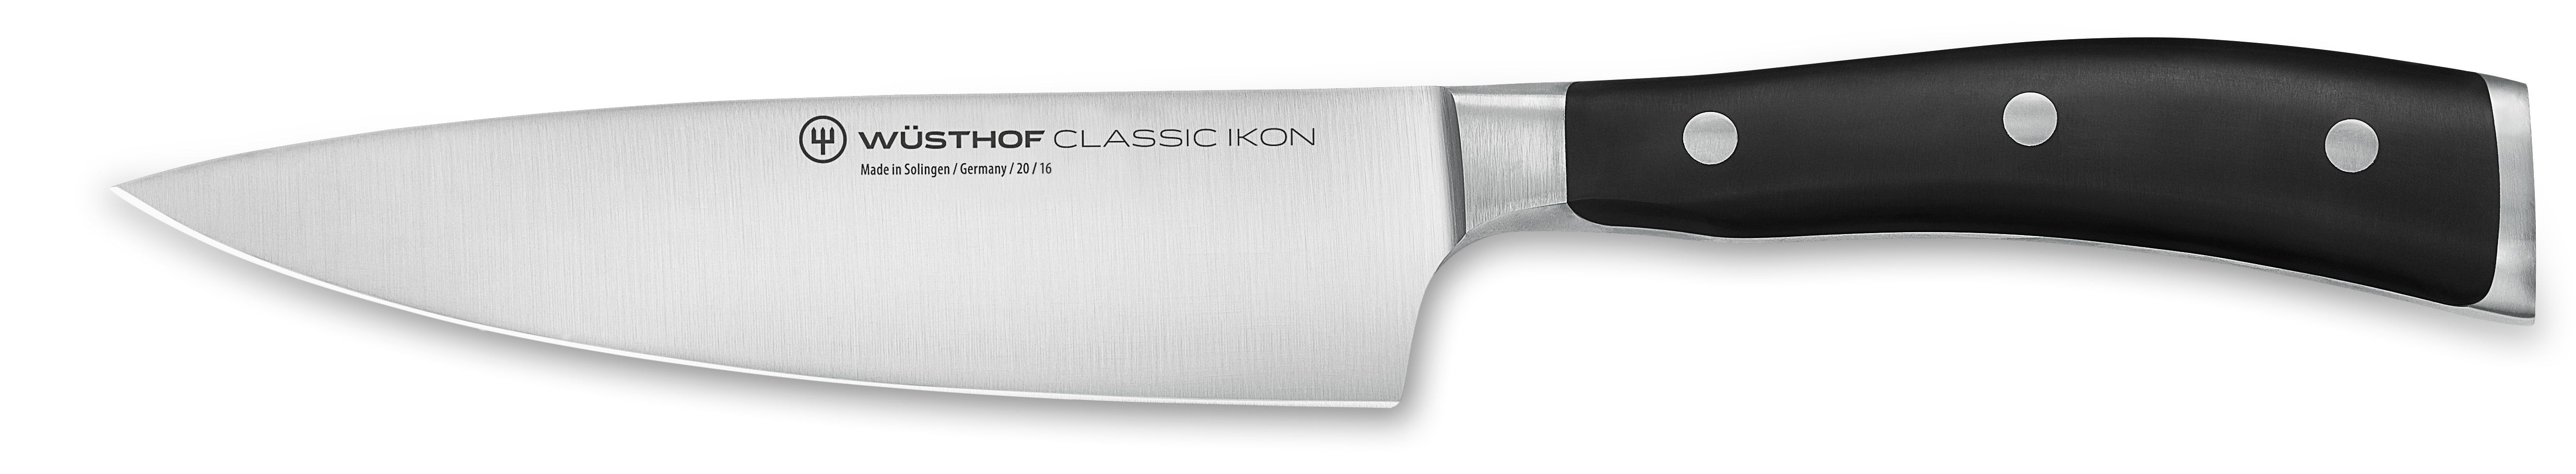 6" Classic Ikon Cook Knife